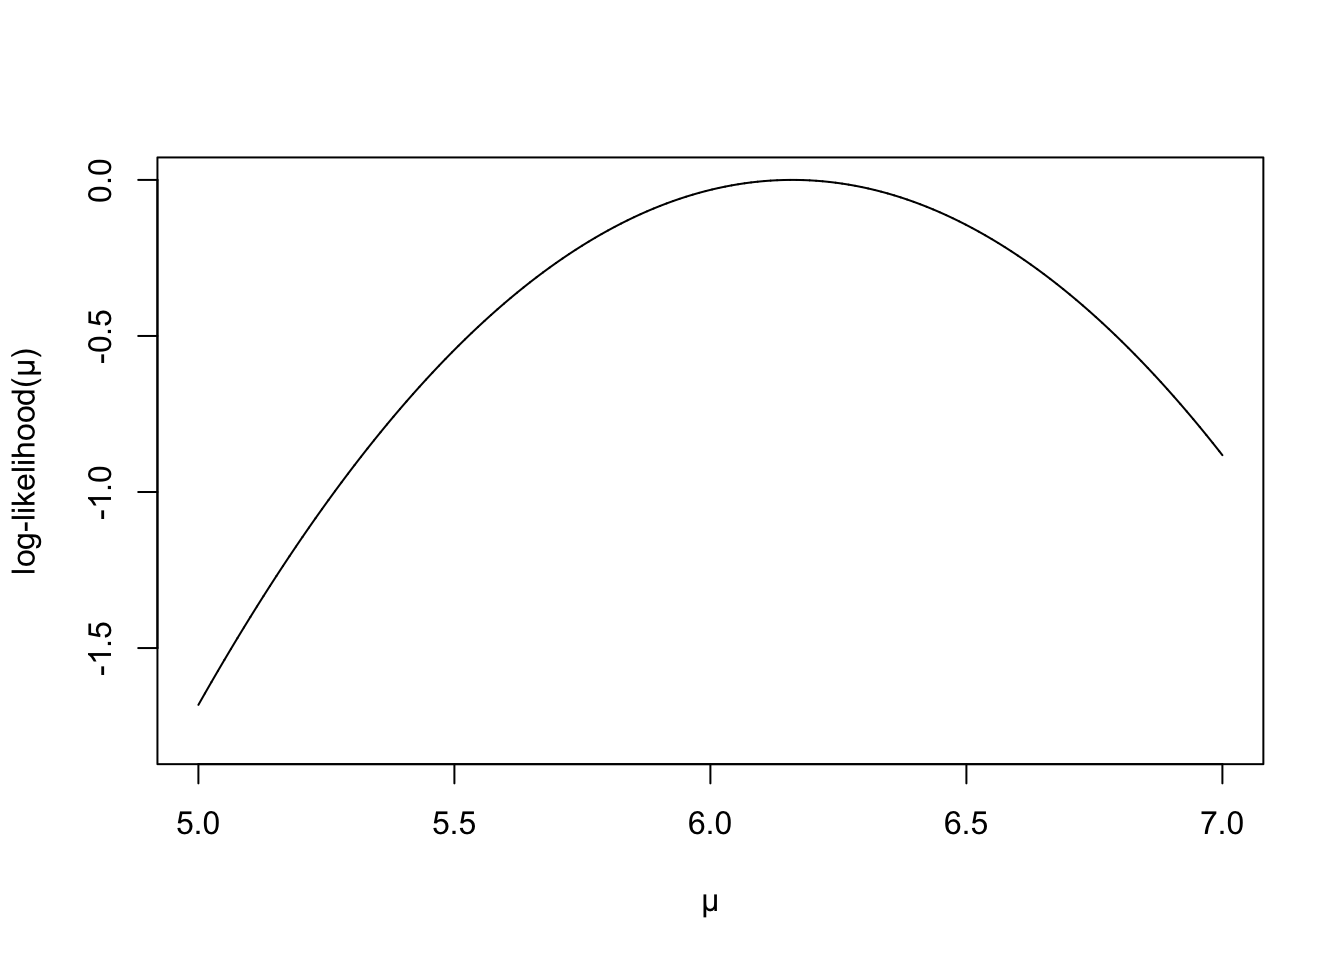 Log-likelihood for normal model